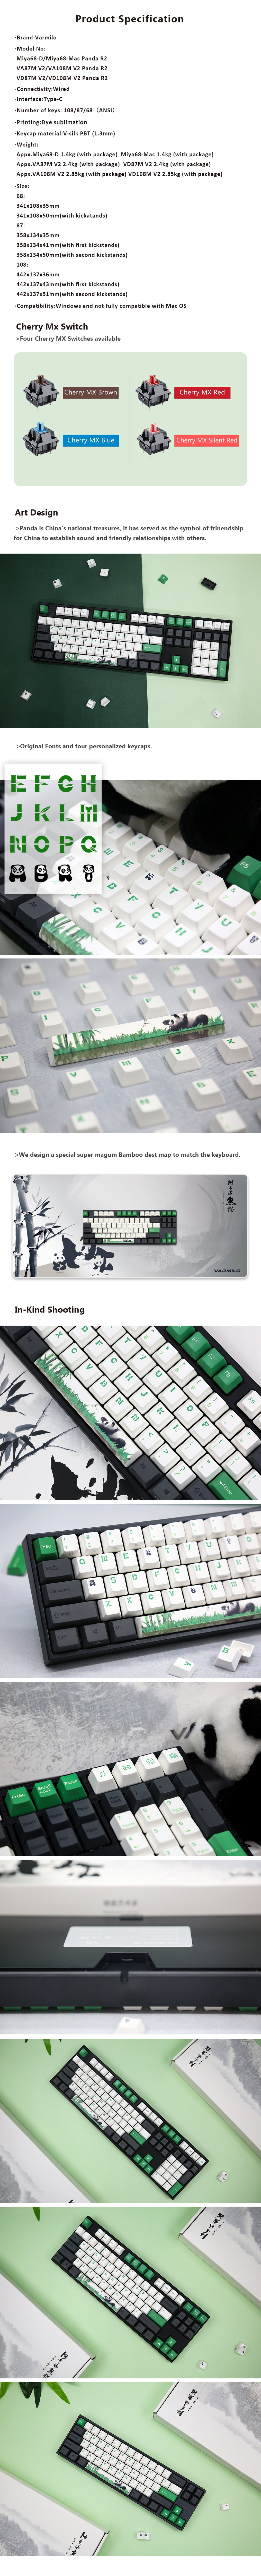 Varmilo VA87 Panda R2 Wired Mechanical Keyboard